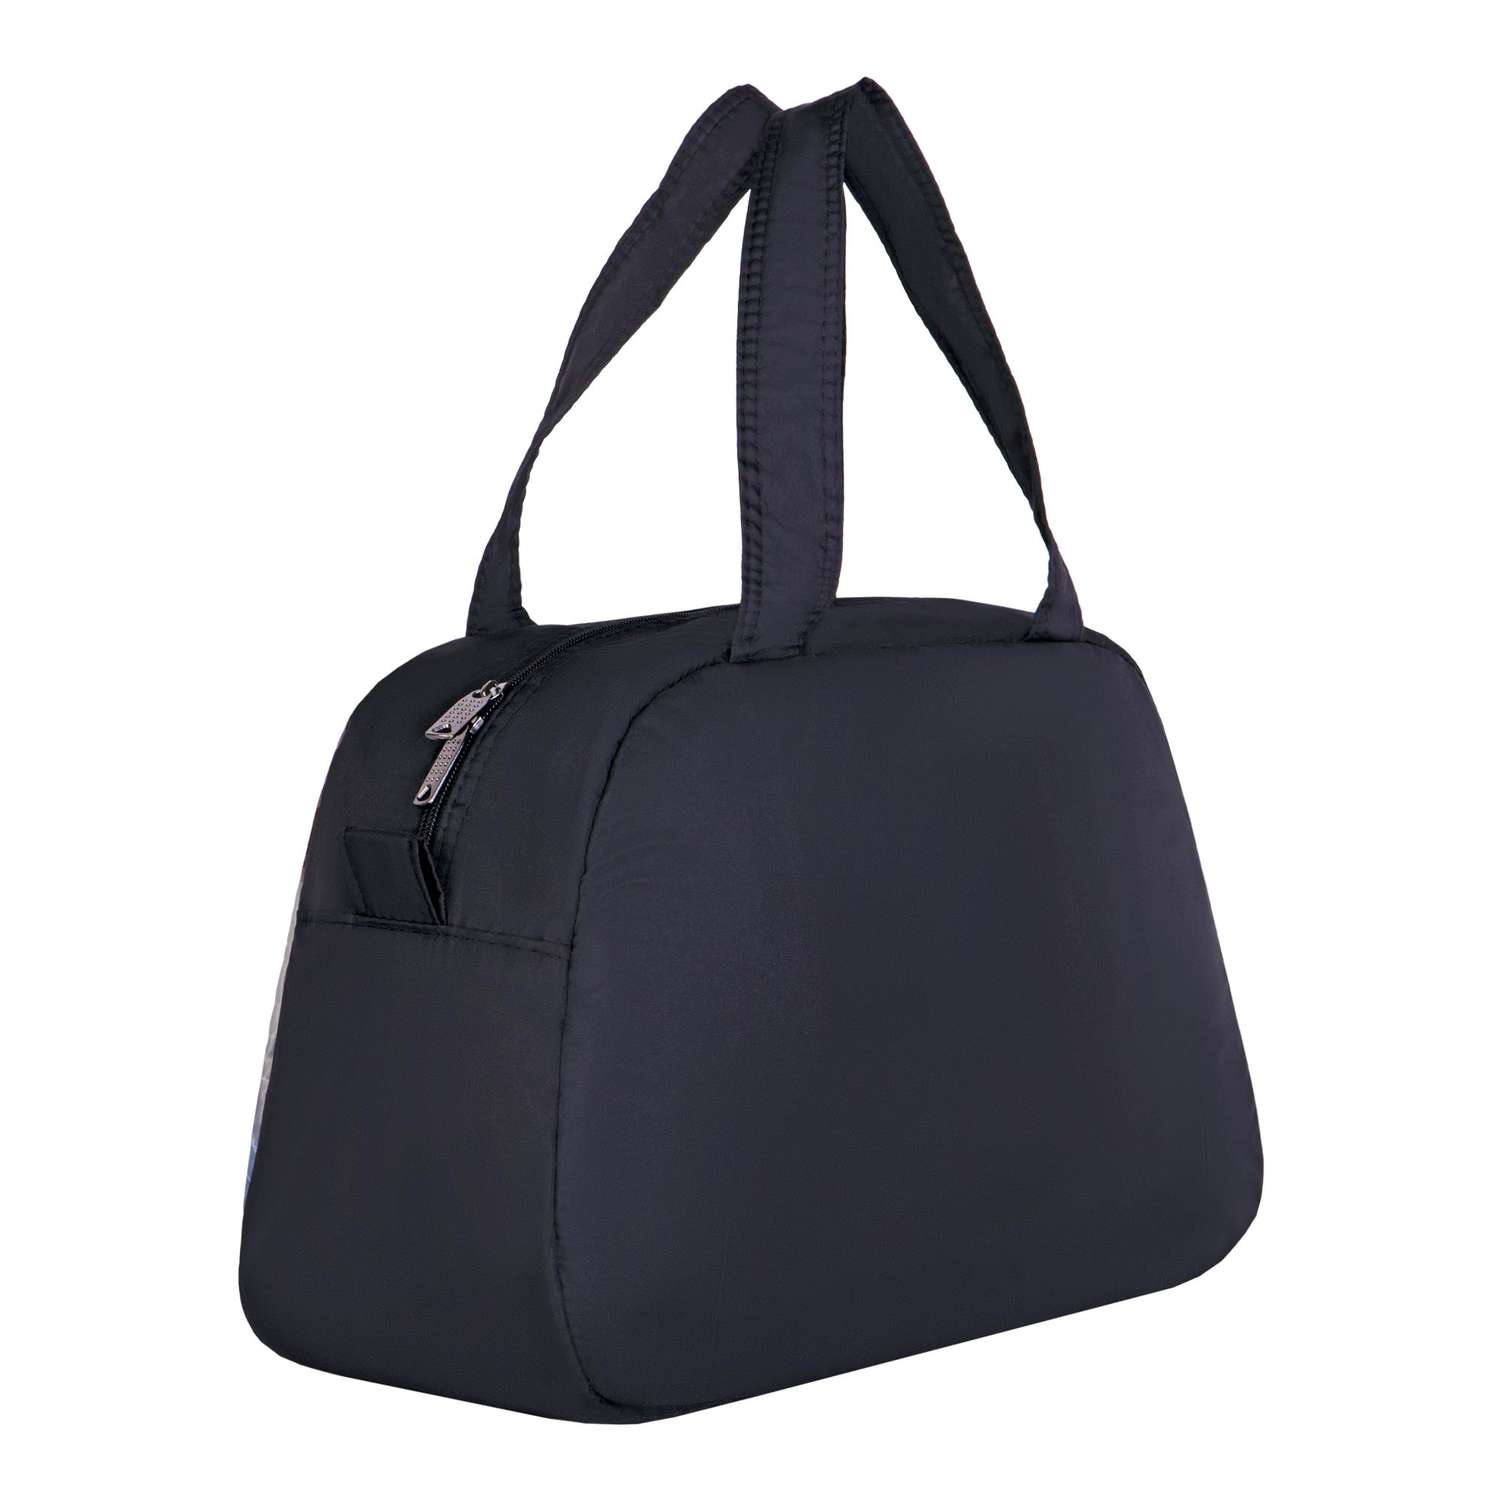 Спортивная сумка ACROSS FM-2 Yoga цвет черный 26х41х16 см - фото 2